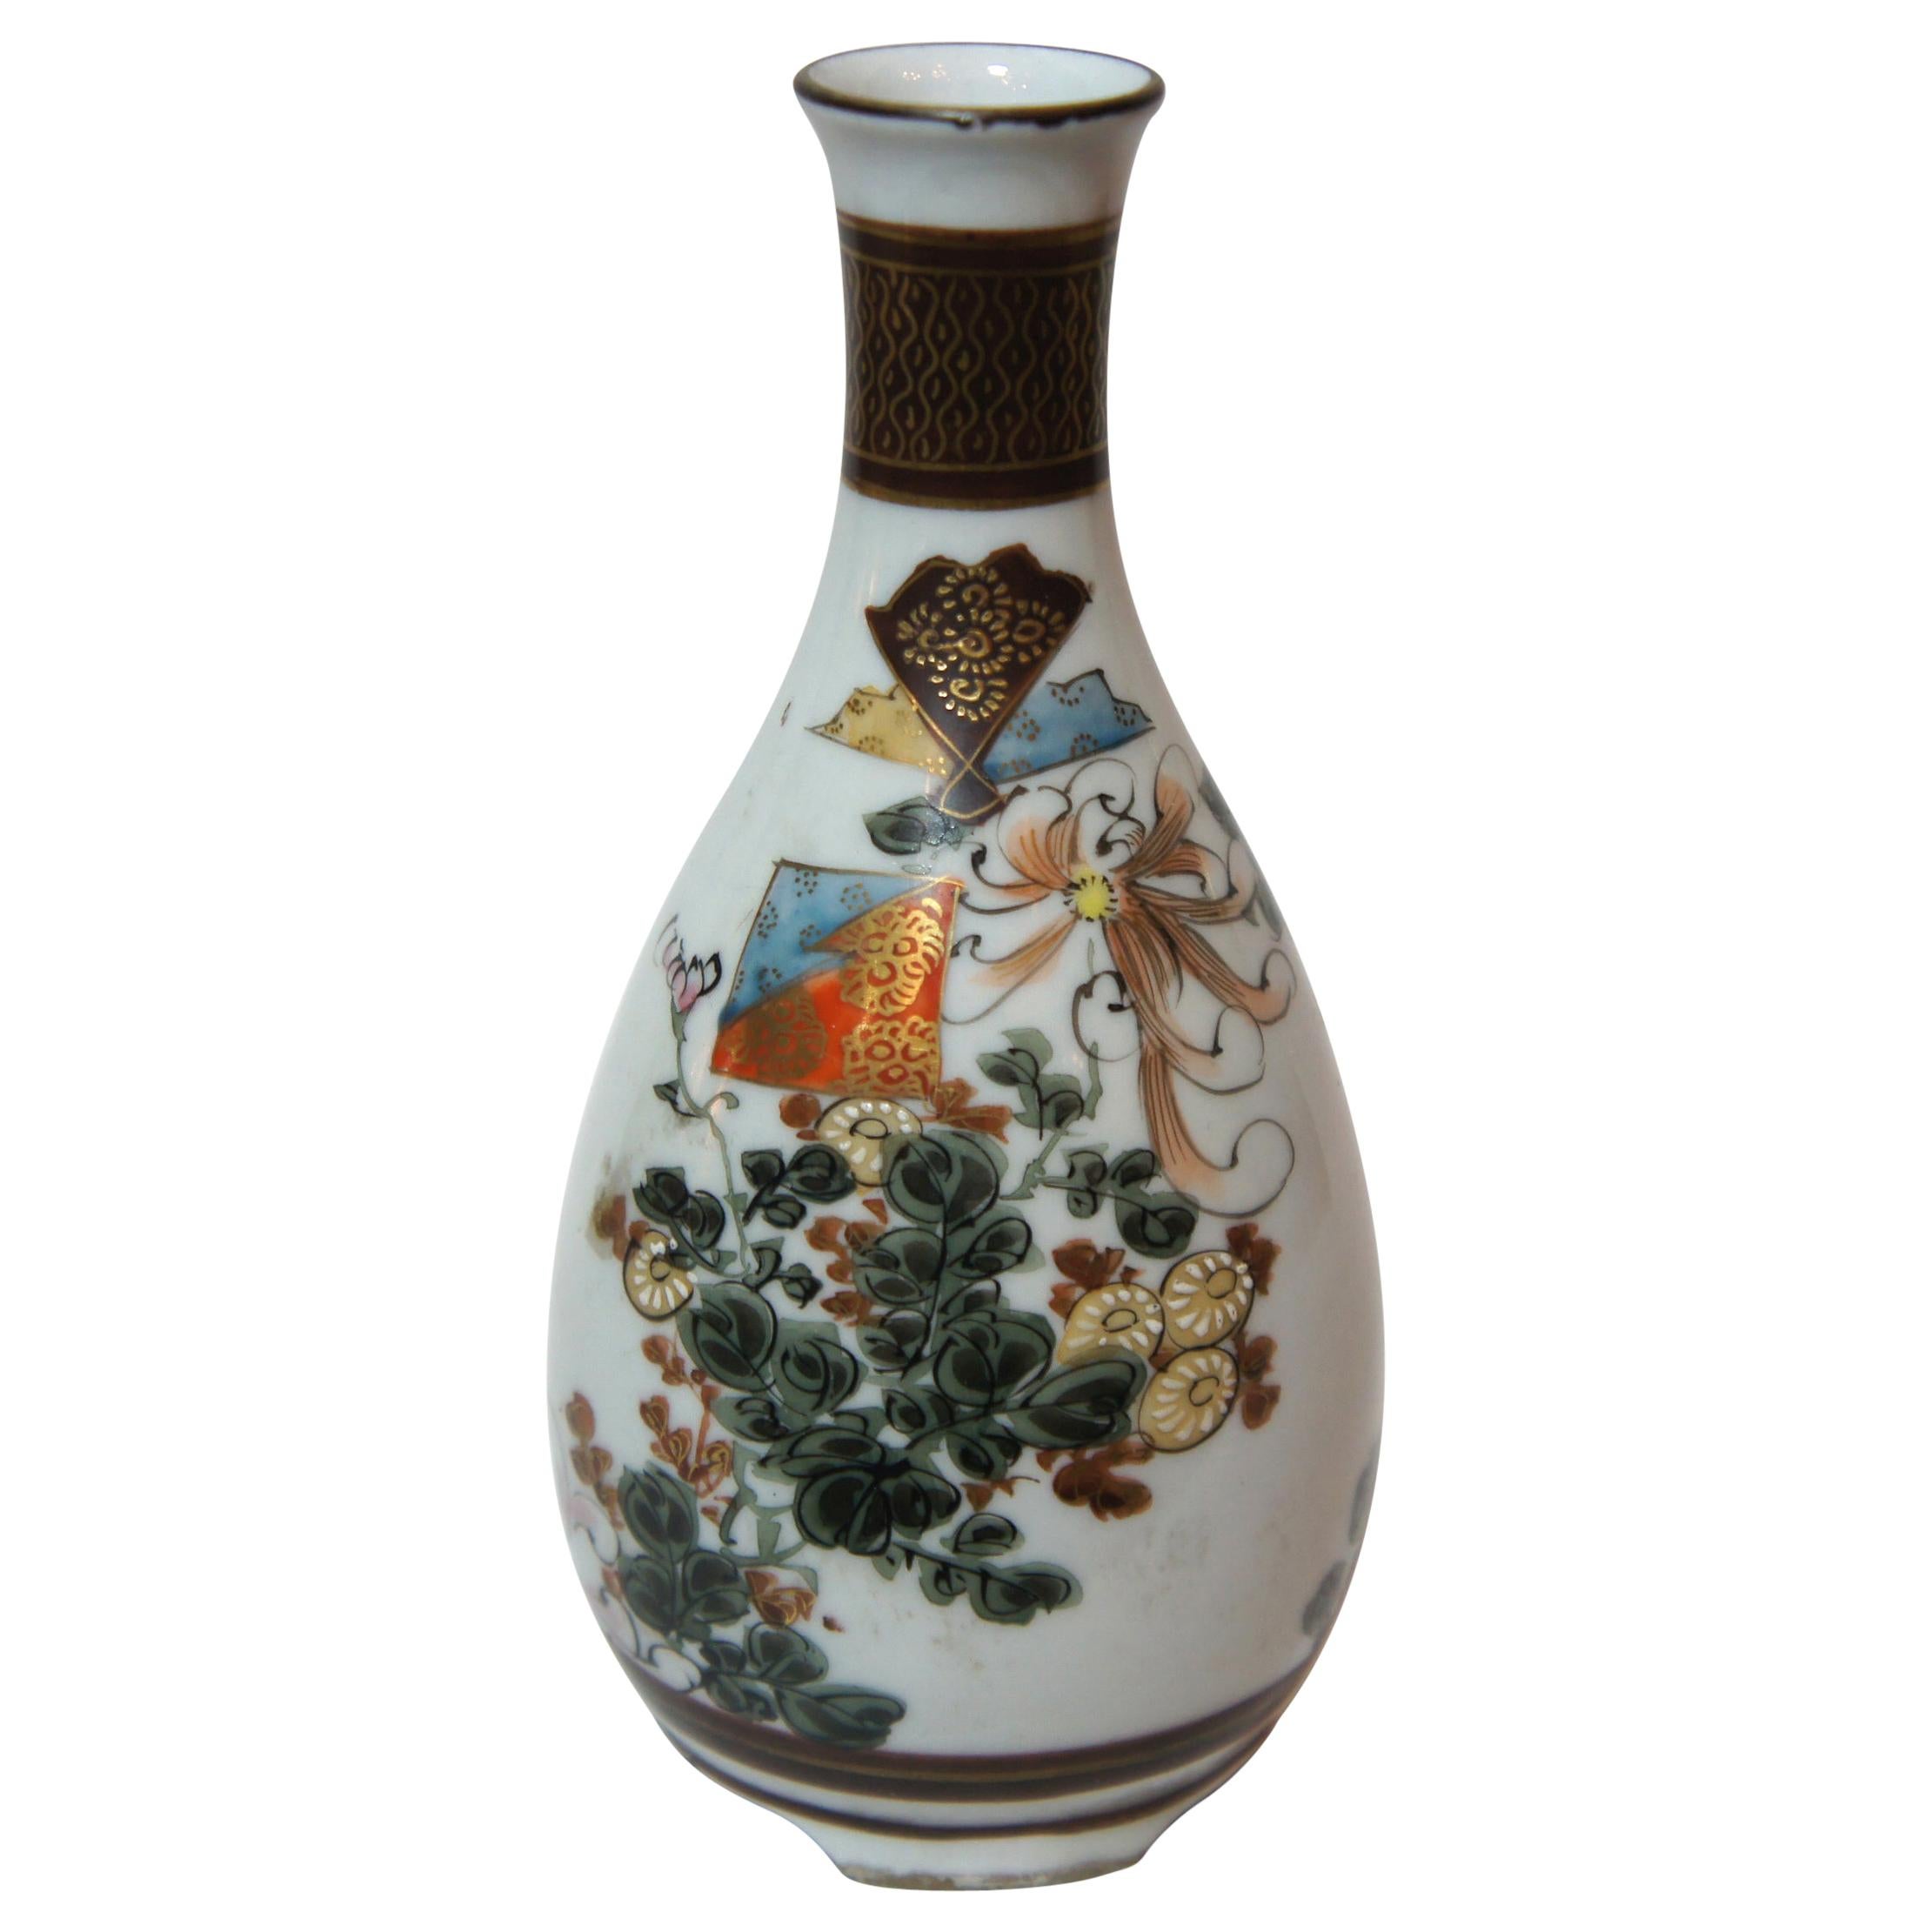 Japanese Porcelain Hand Painted Sake Bottle on Kutani Ware, 1950s